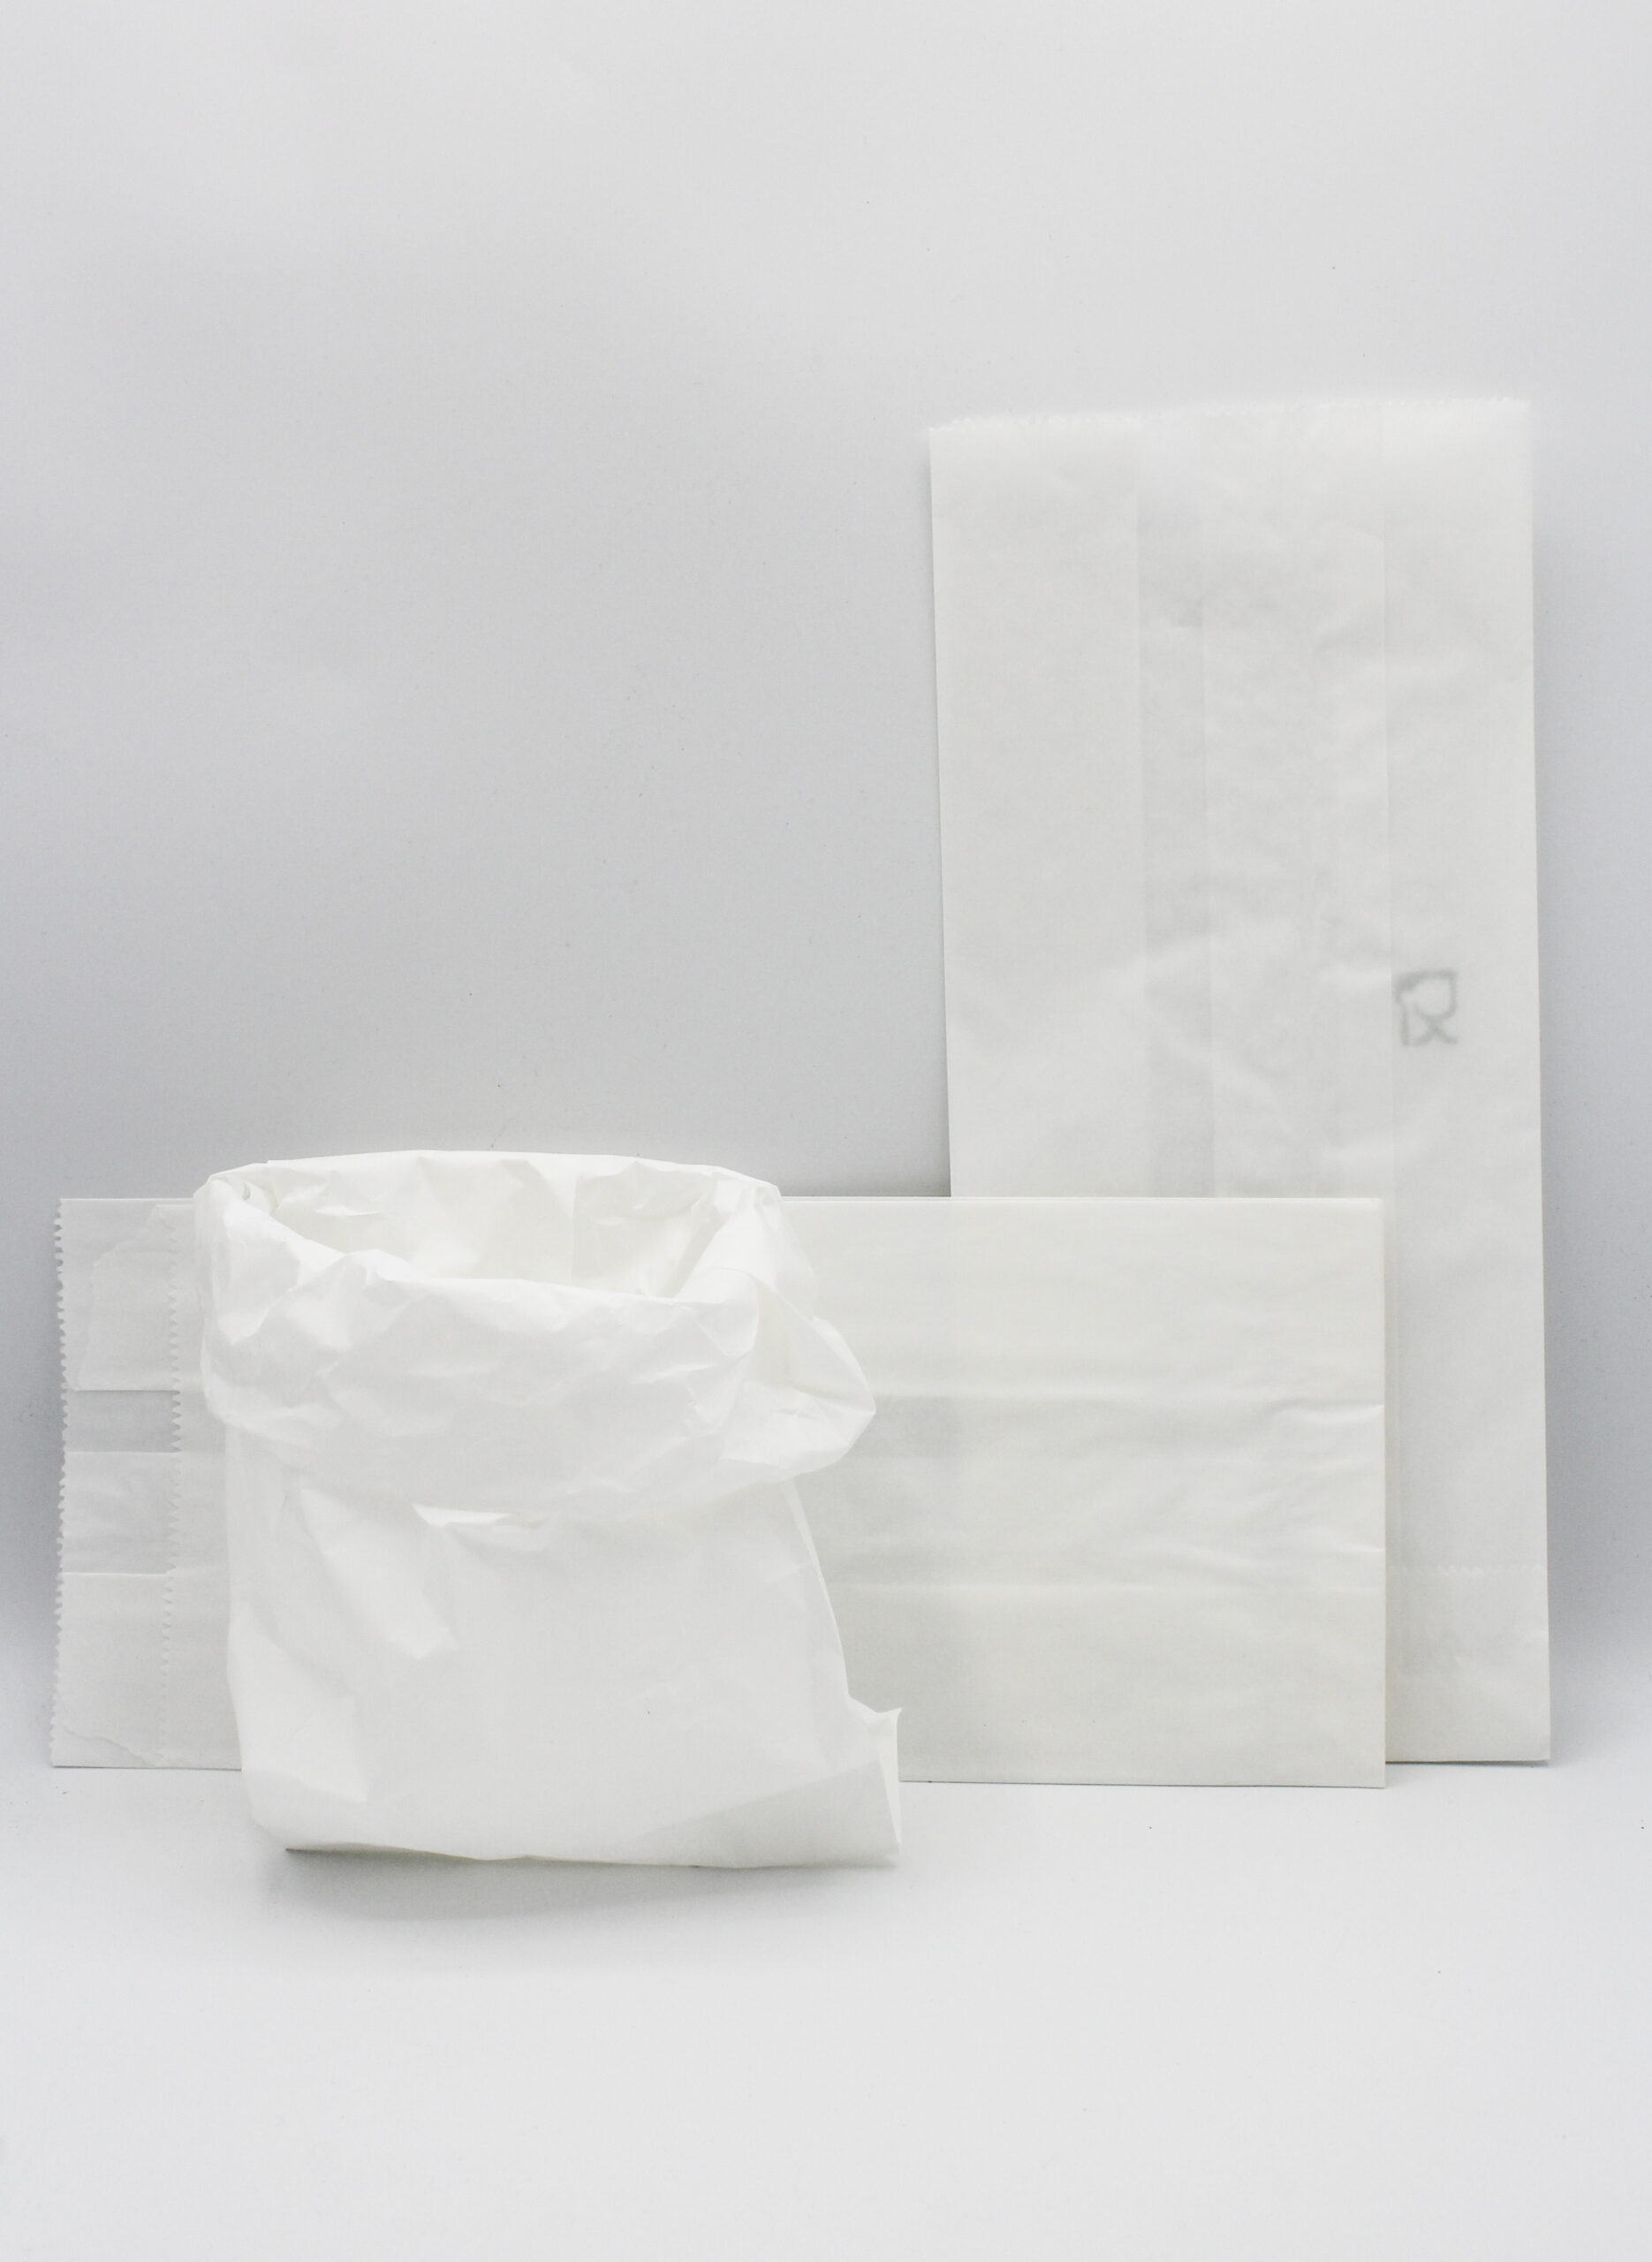 Sacchetto Pane Bianco - CCM Packaging - Specialisti nelle